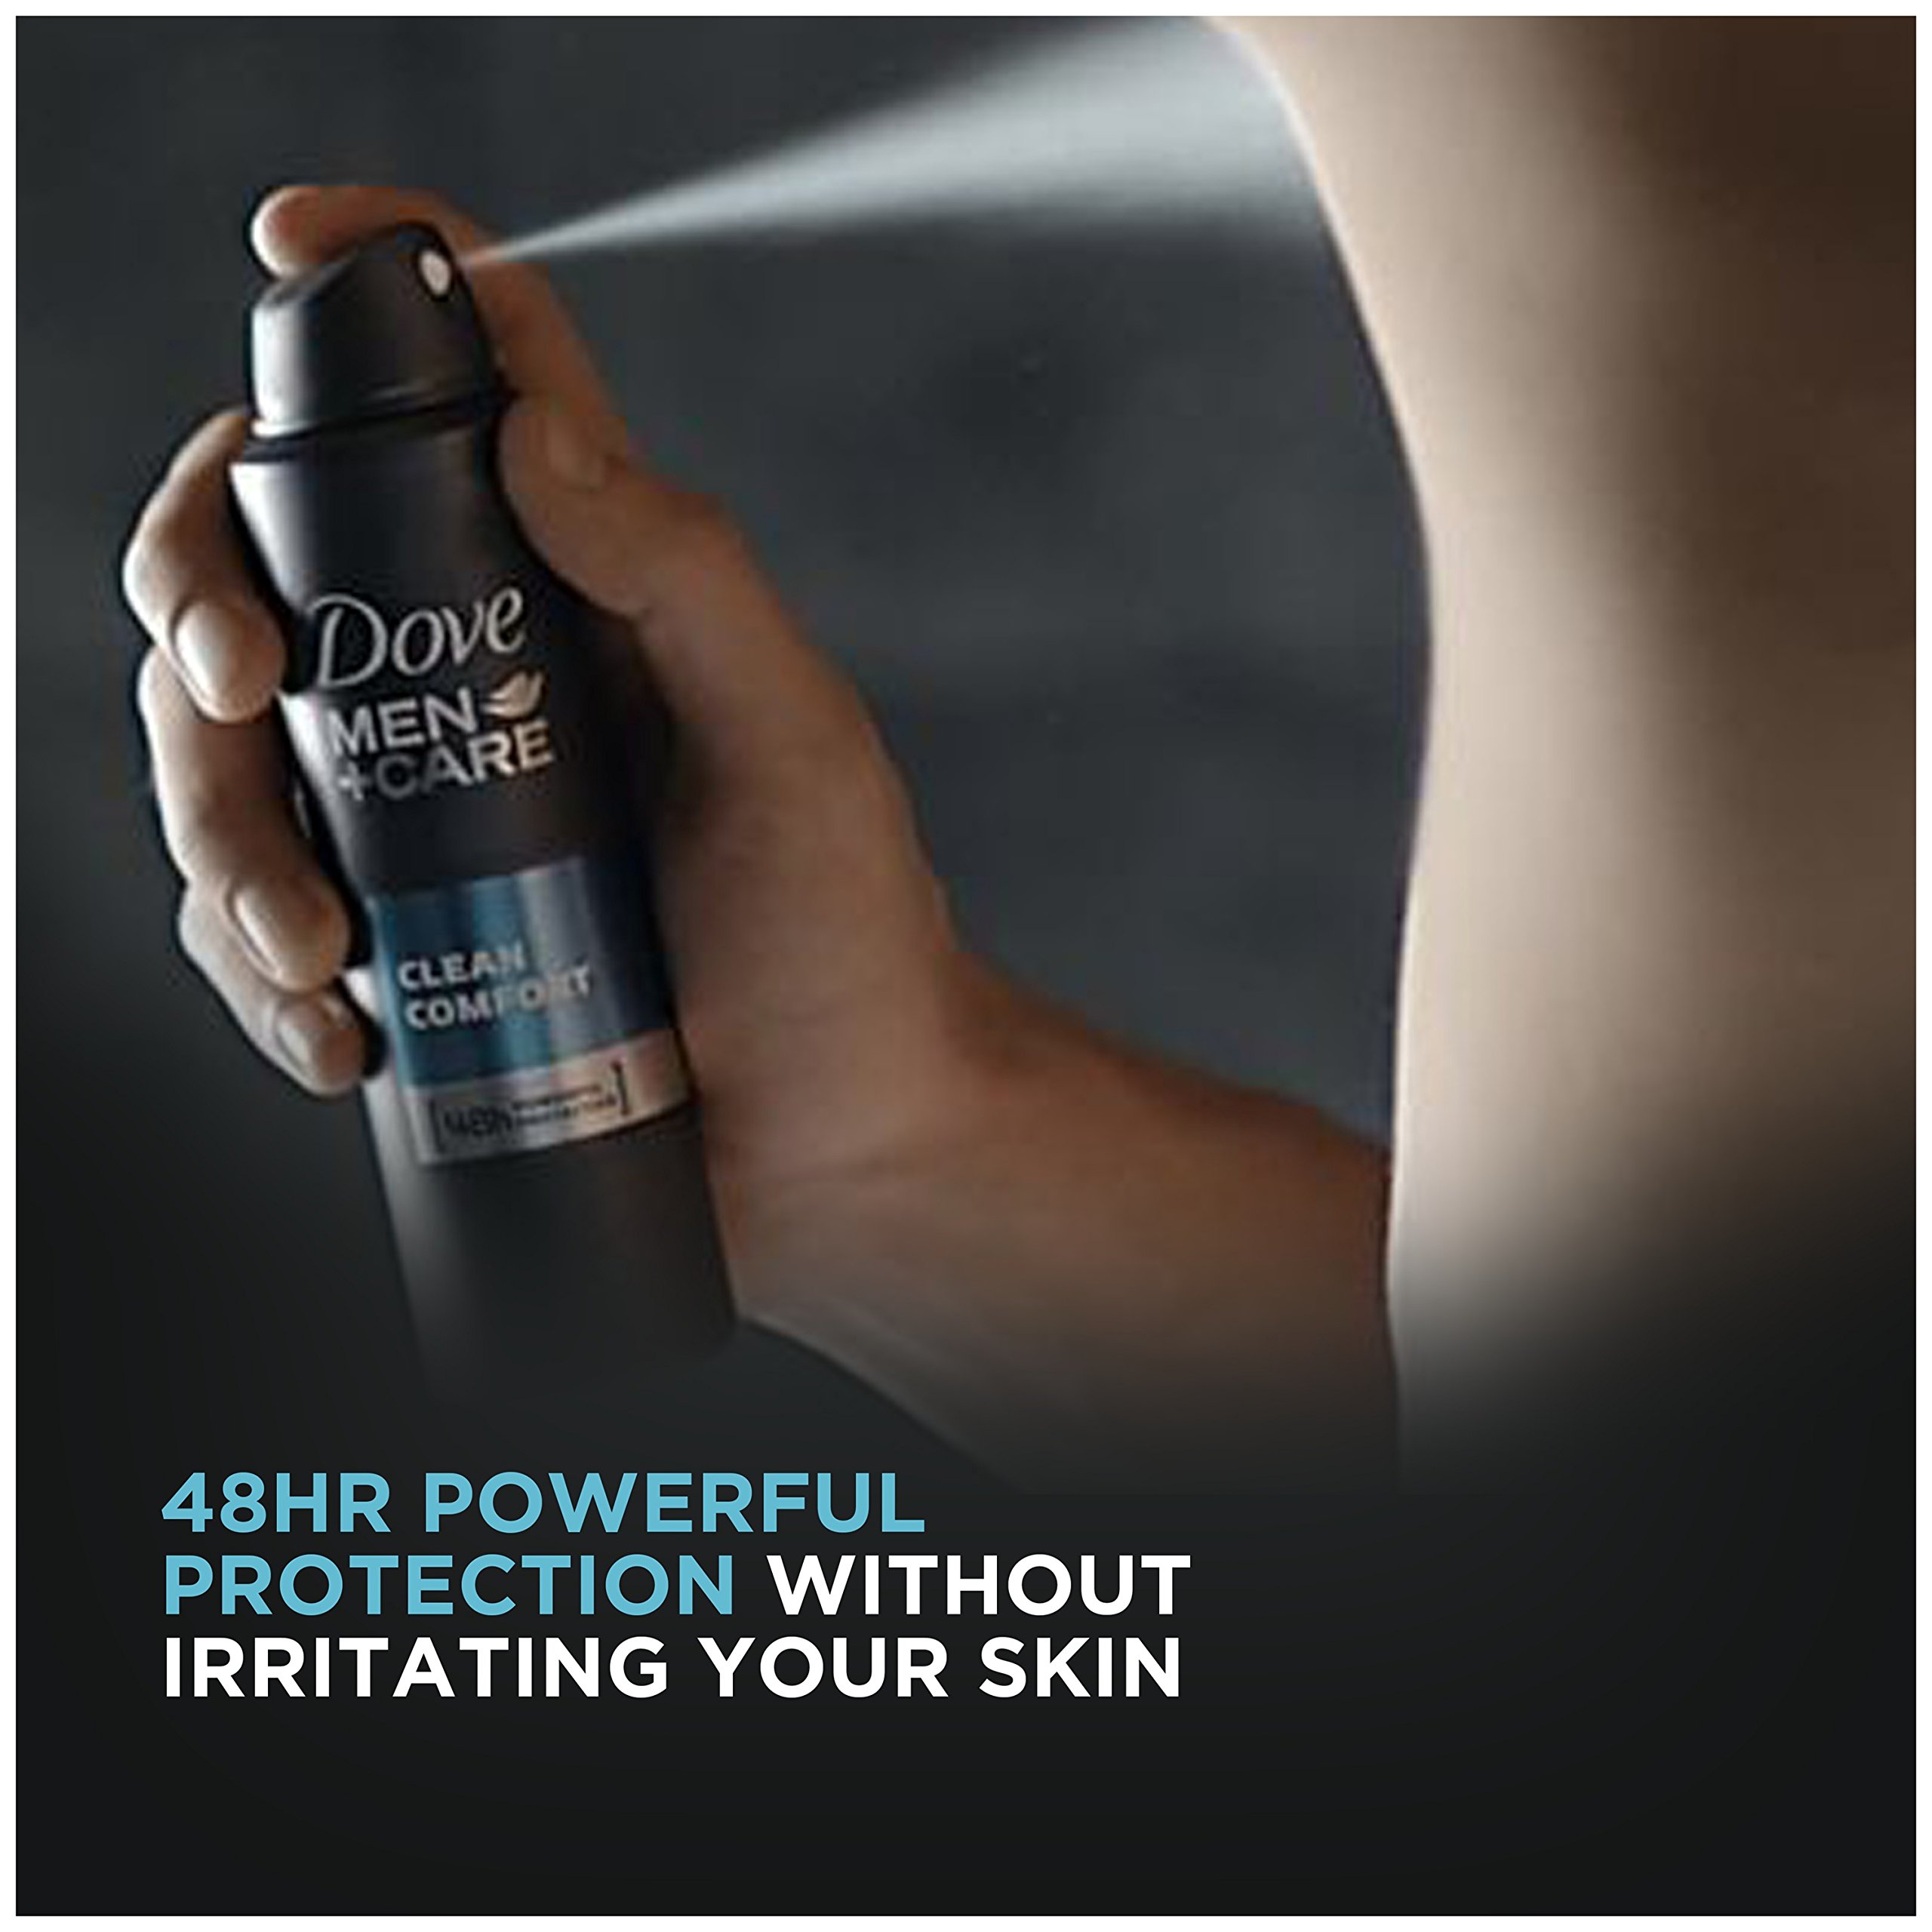 Dove Men+Care Dry Spray Antiperspirant Deodorant, Clean Comfort, 3.8 oz